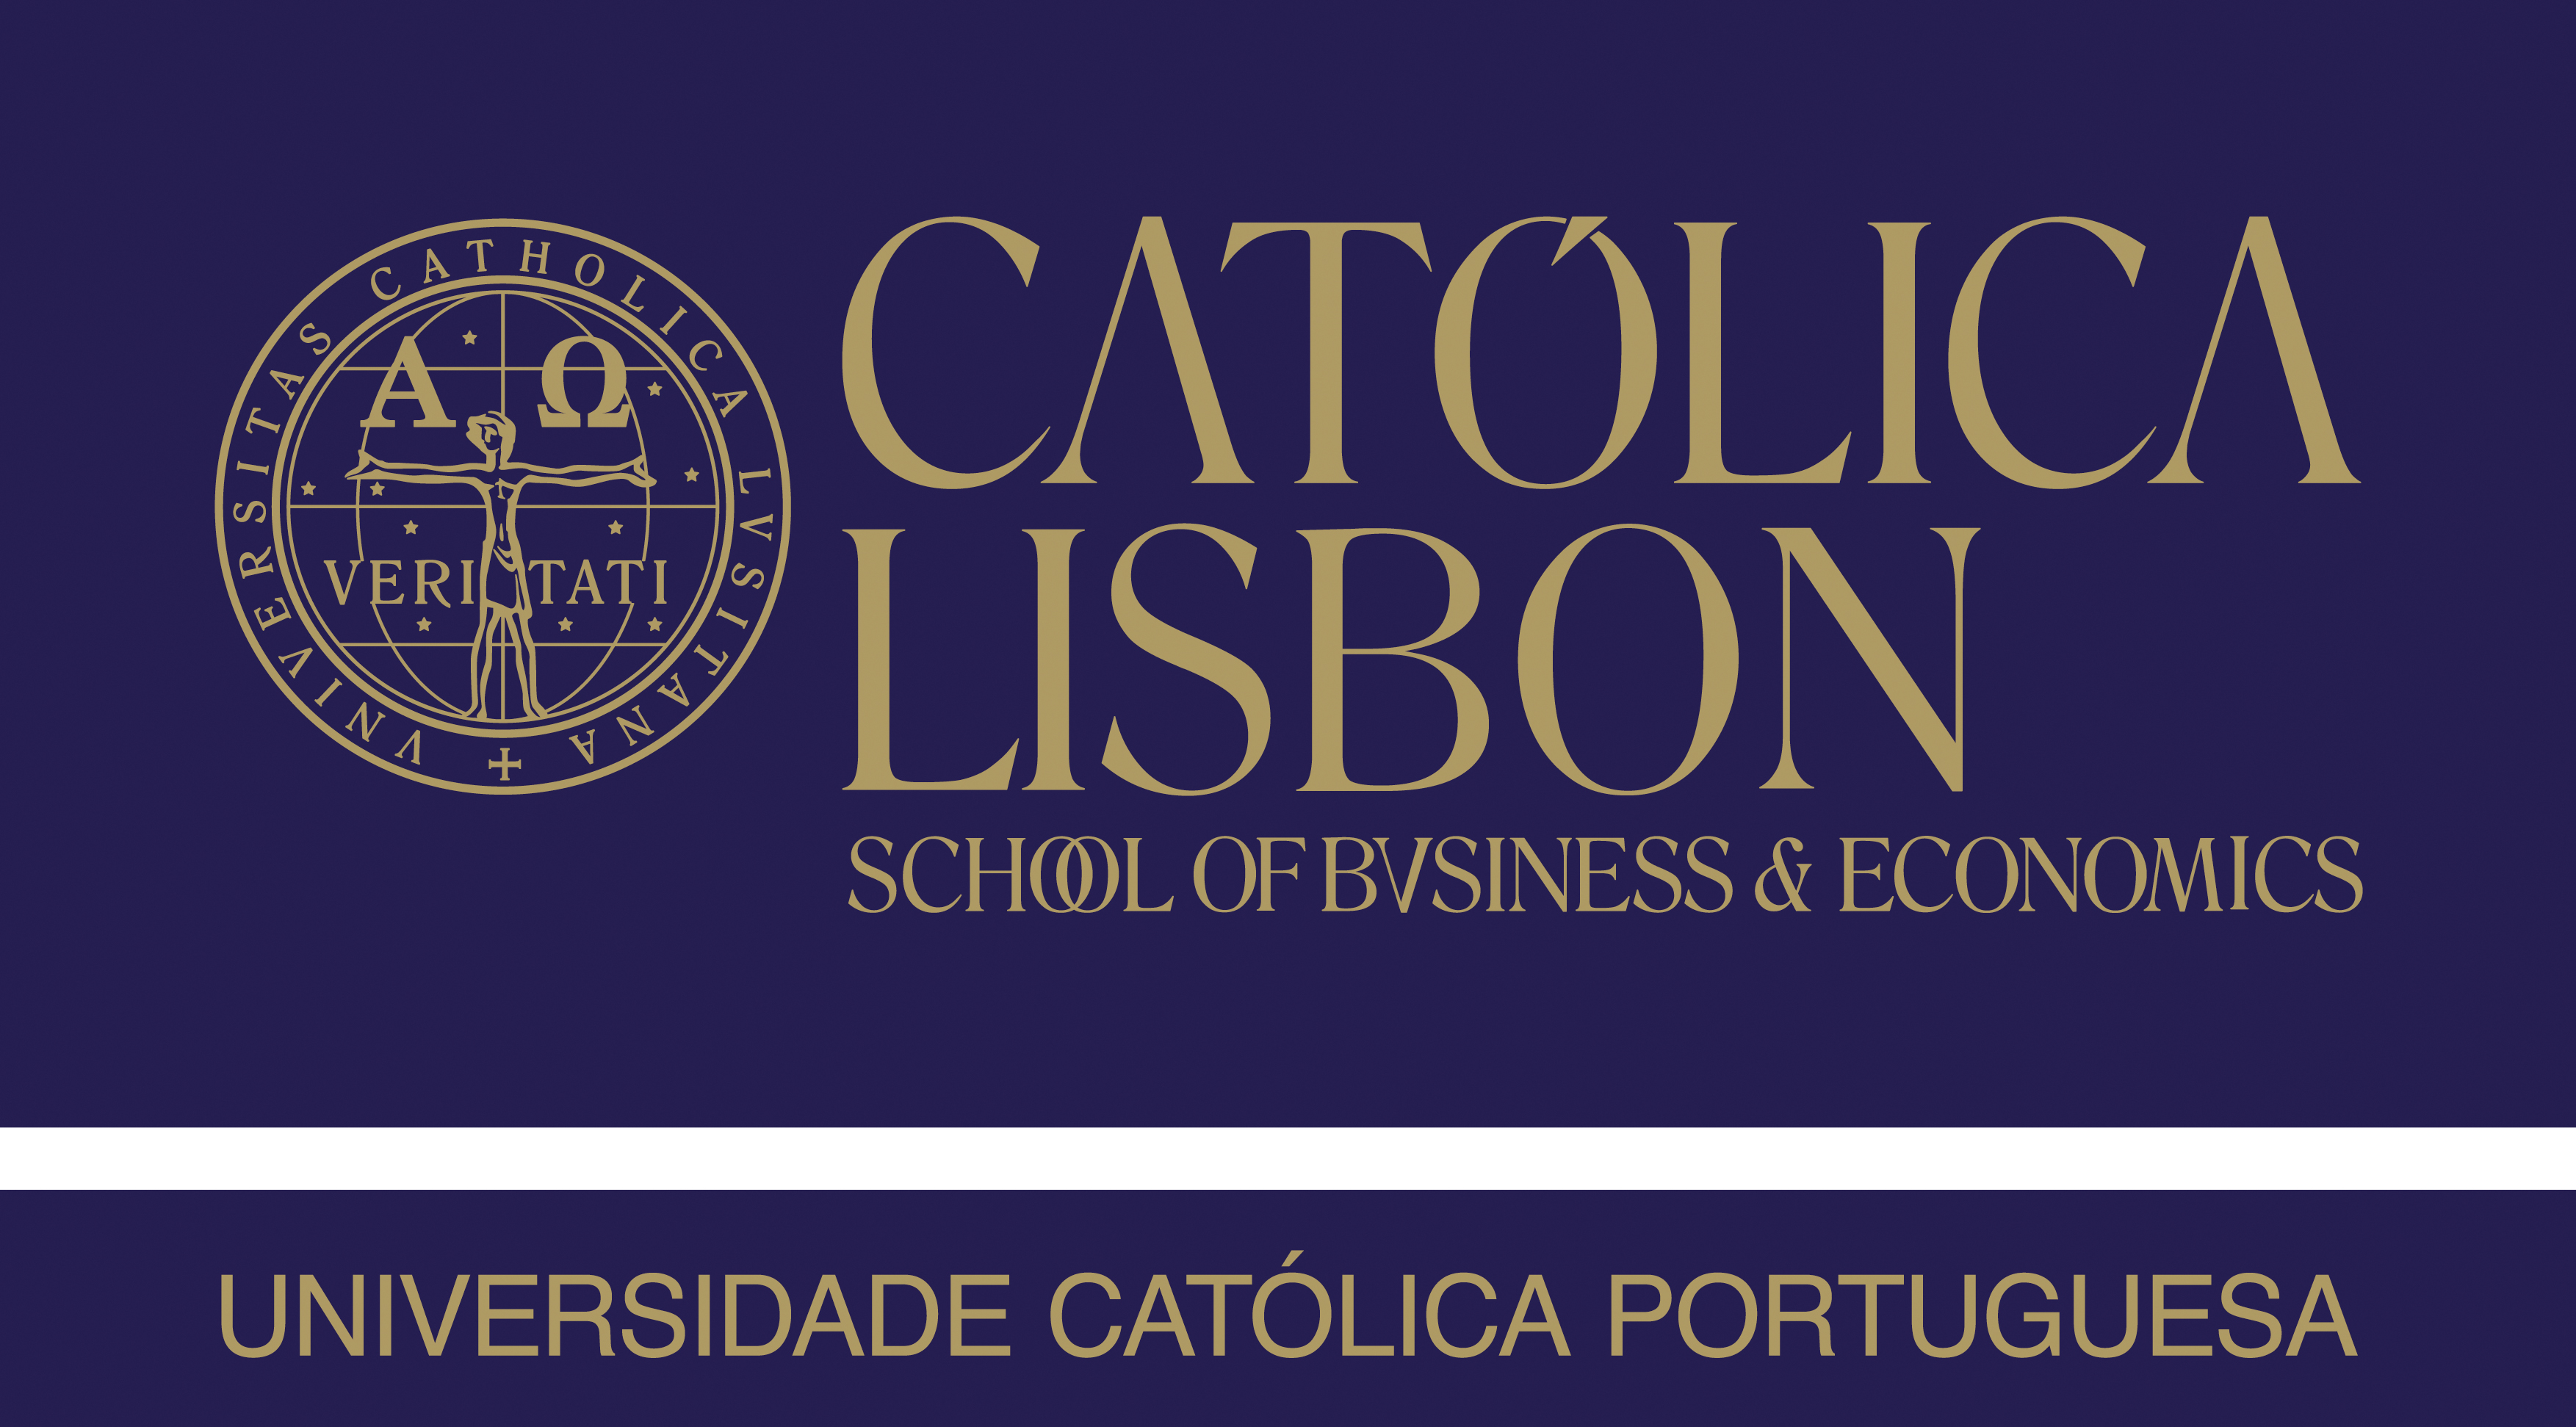 Catolica Lisbon School